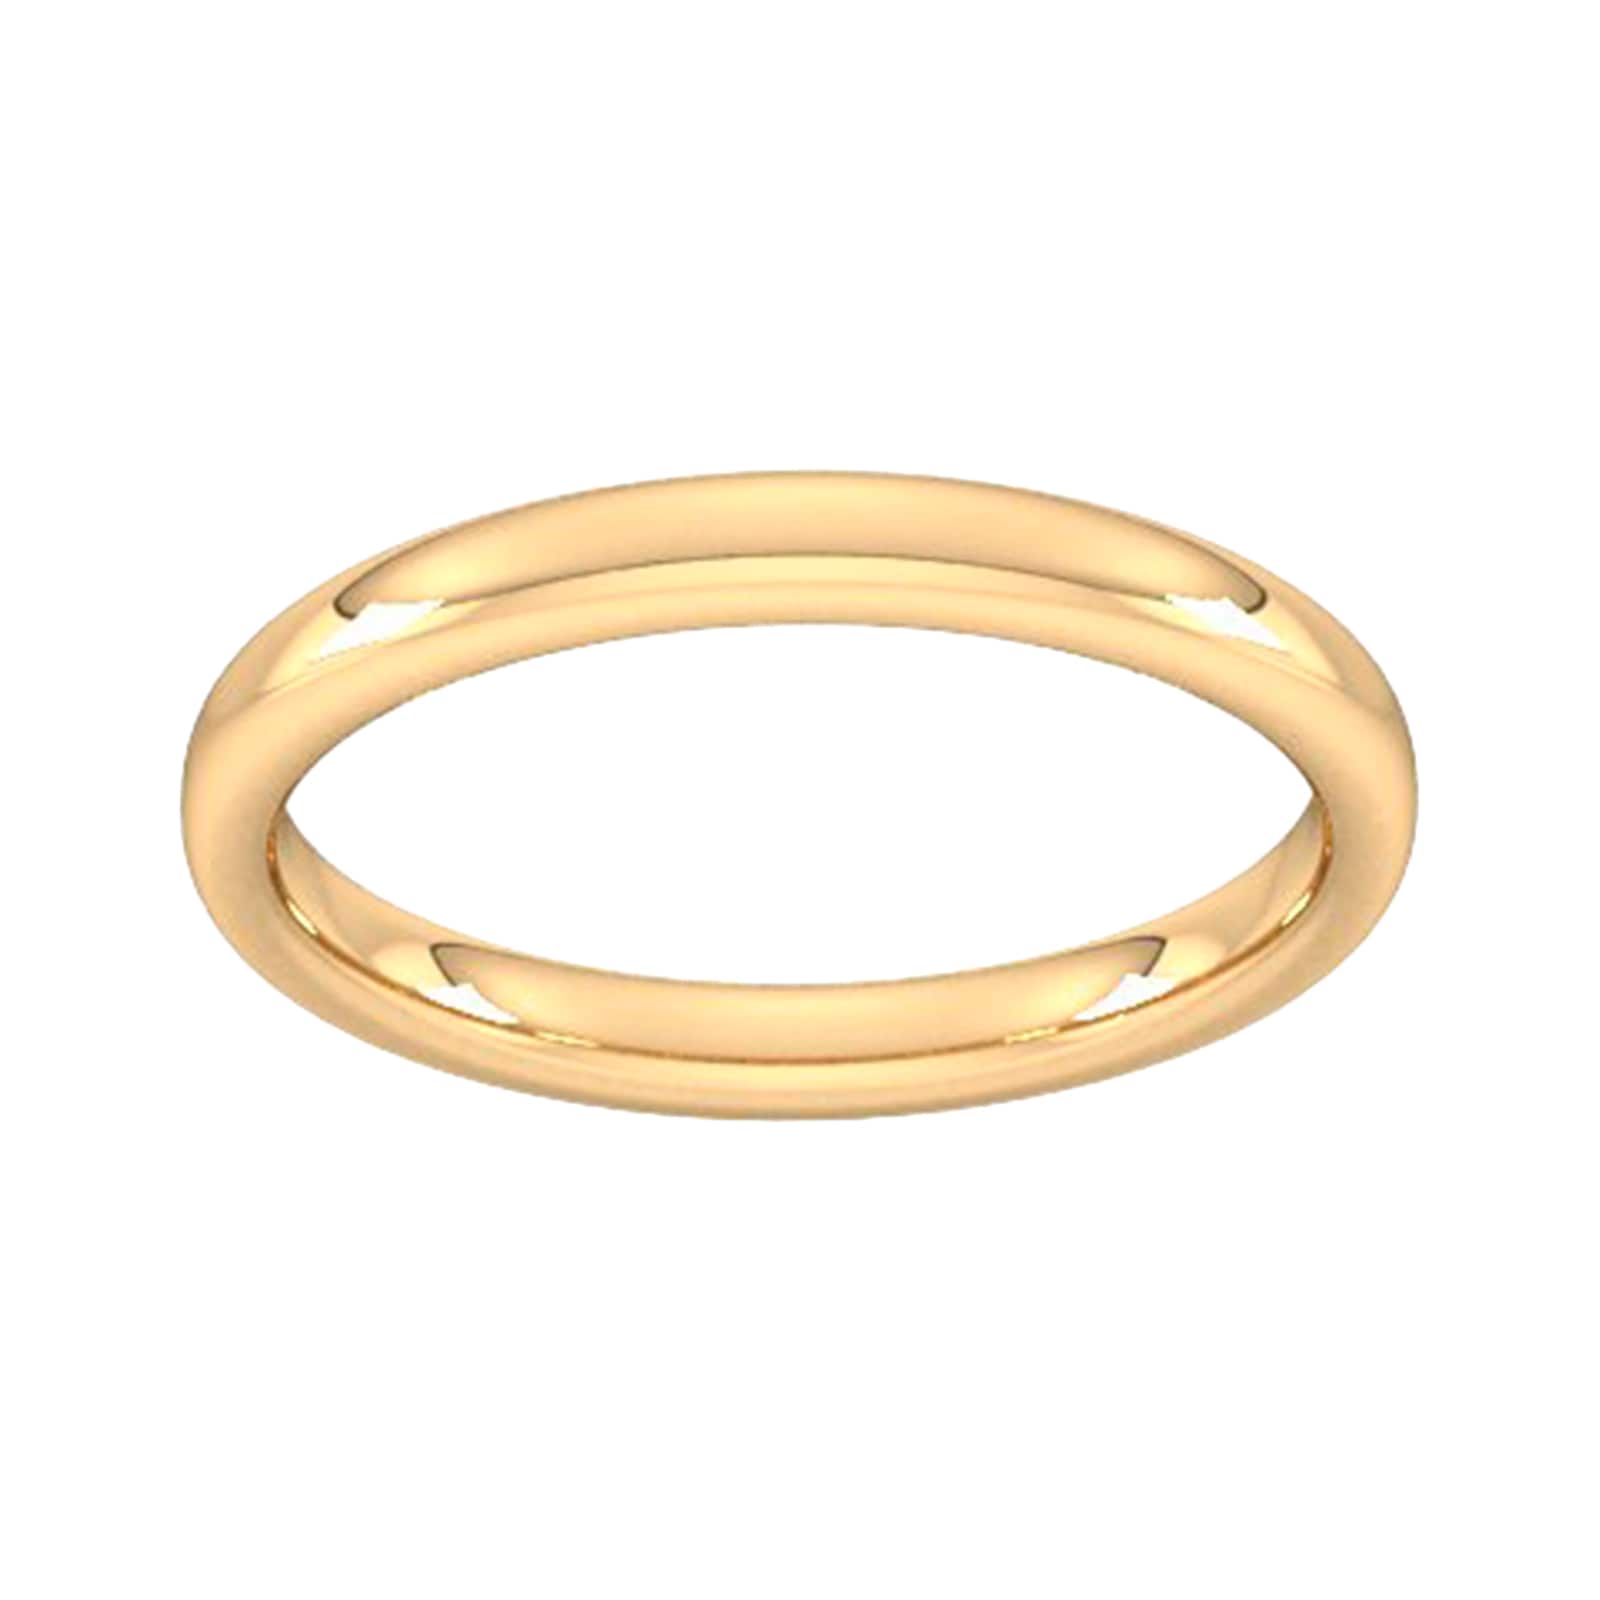 2.5mm Slight Court Heavy Wedding Ring In 9 Carat Yellow Gold - Ring Size J